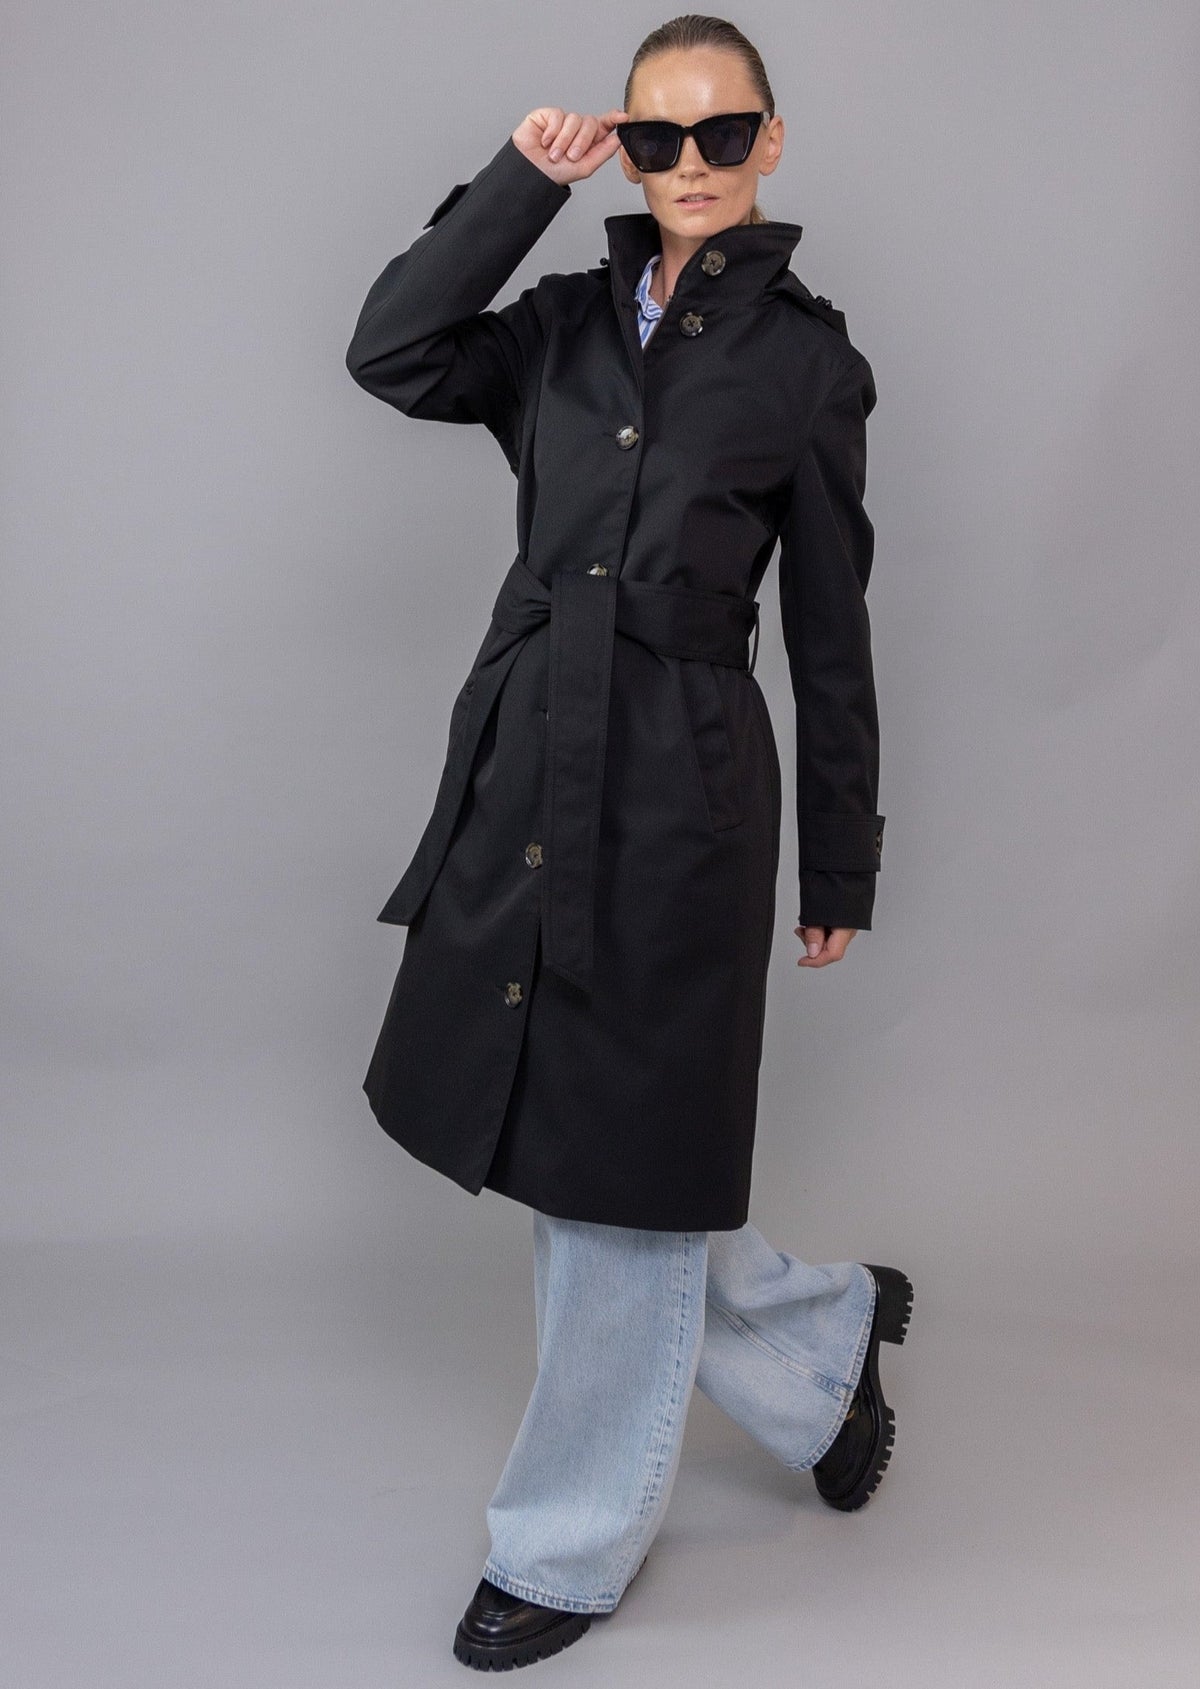 Waterproof Waistbelt Raincoat - Black Matte